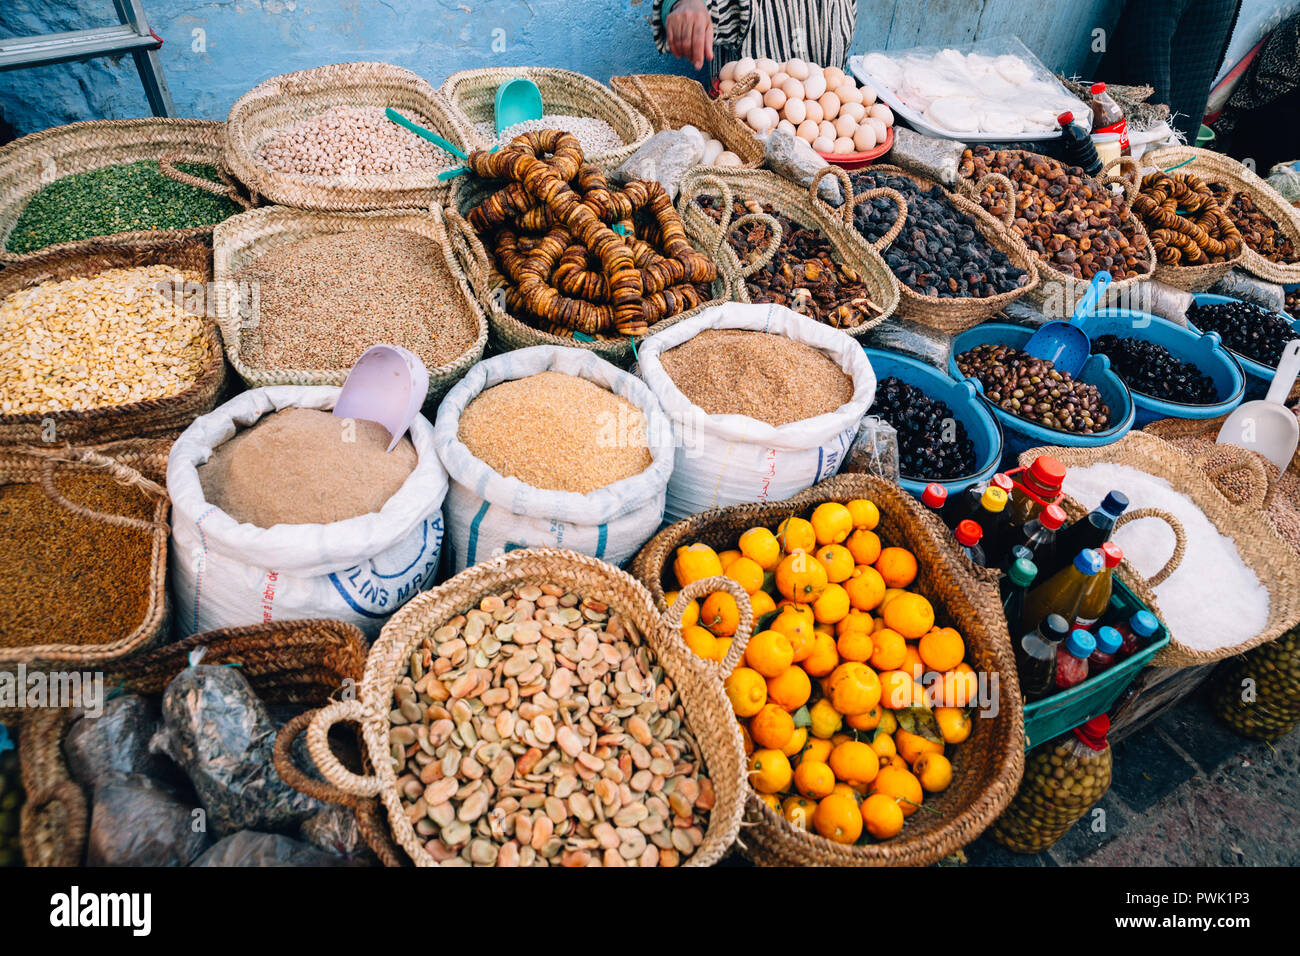 Chefchaouen, Morocco, 2018 Stock Photo